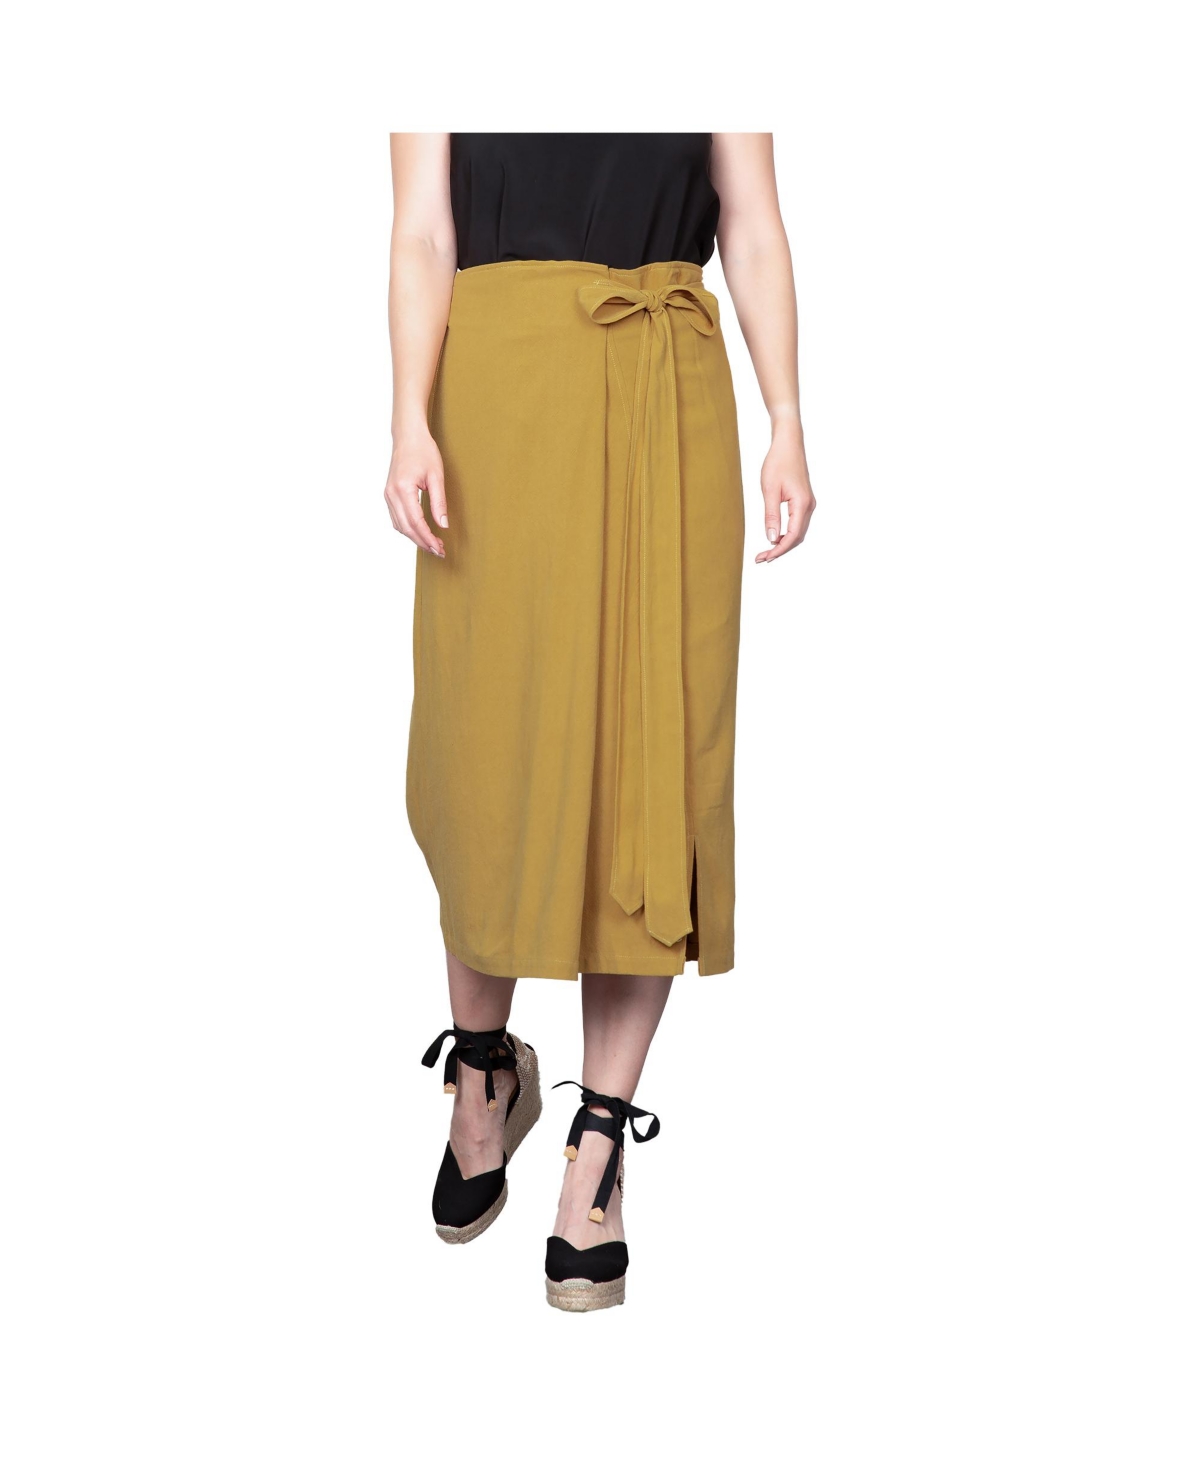 Women's Wrap Style A-Line Skirt - Mustard